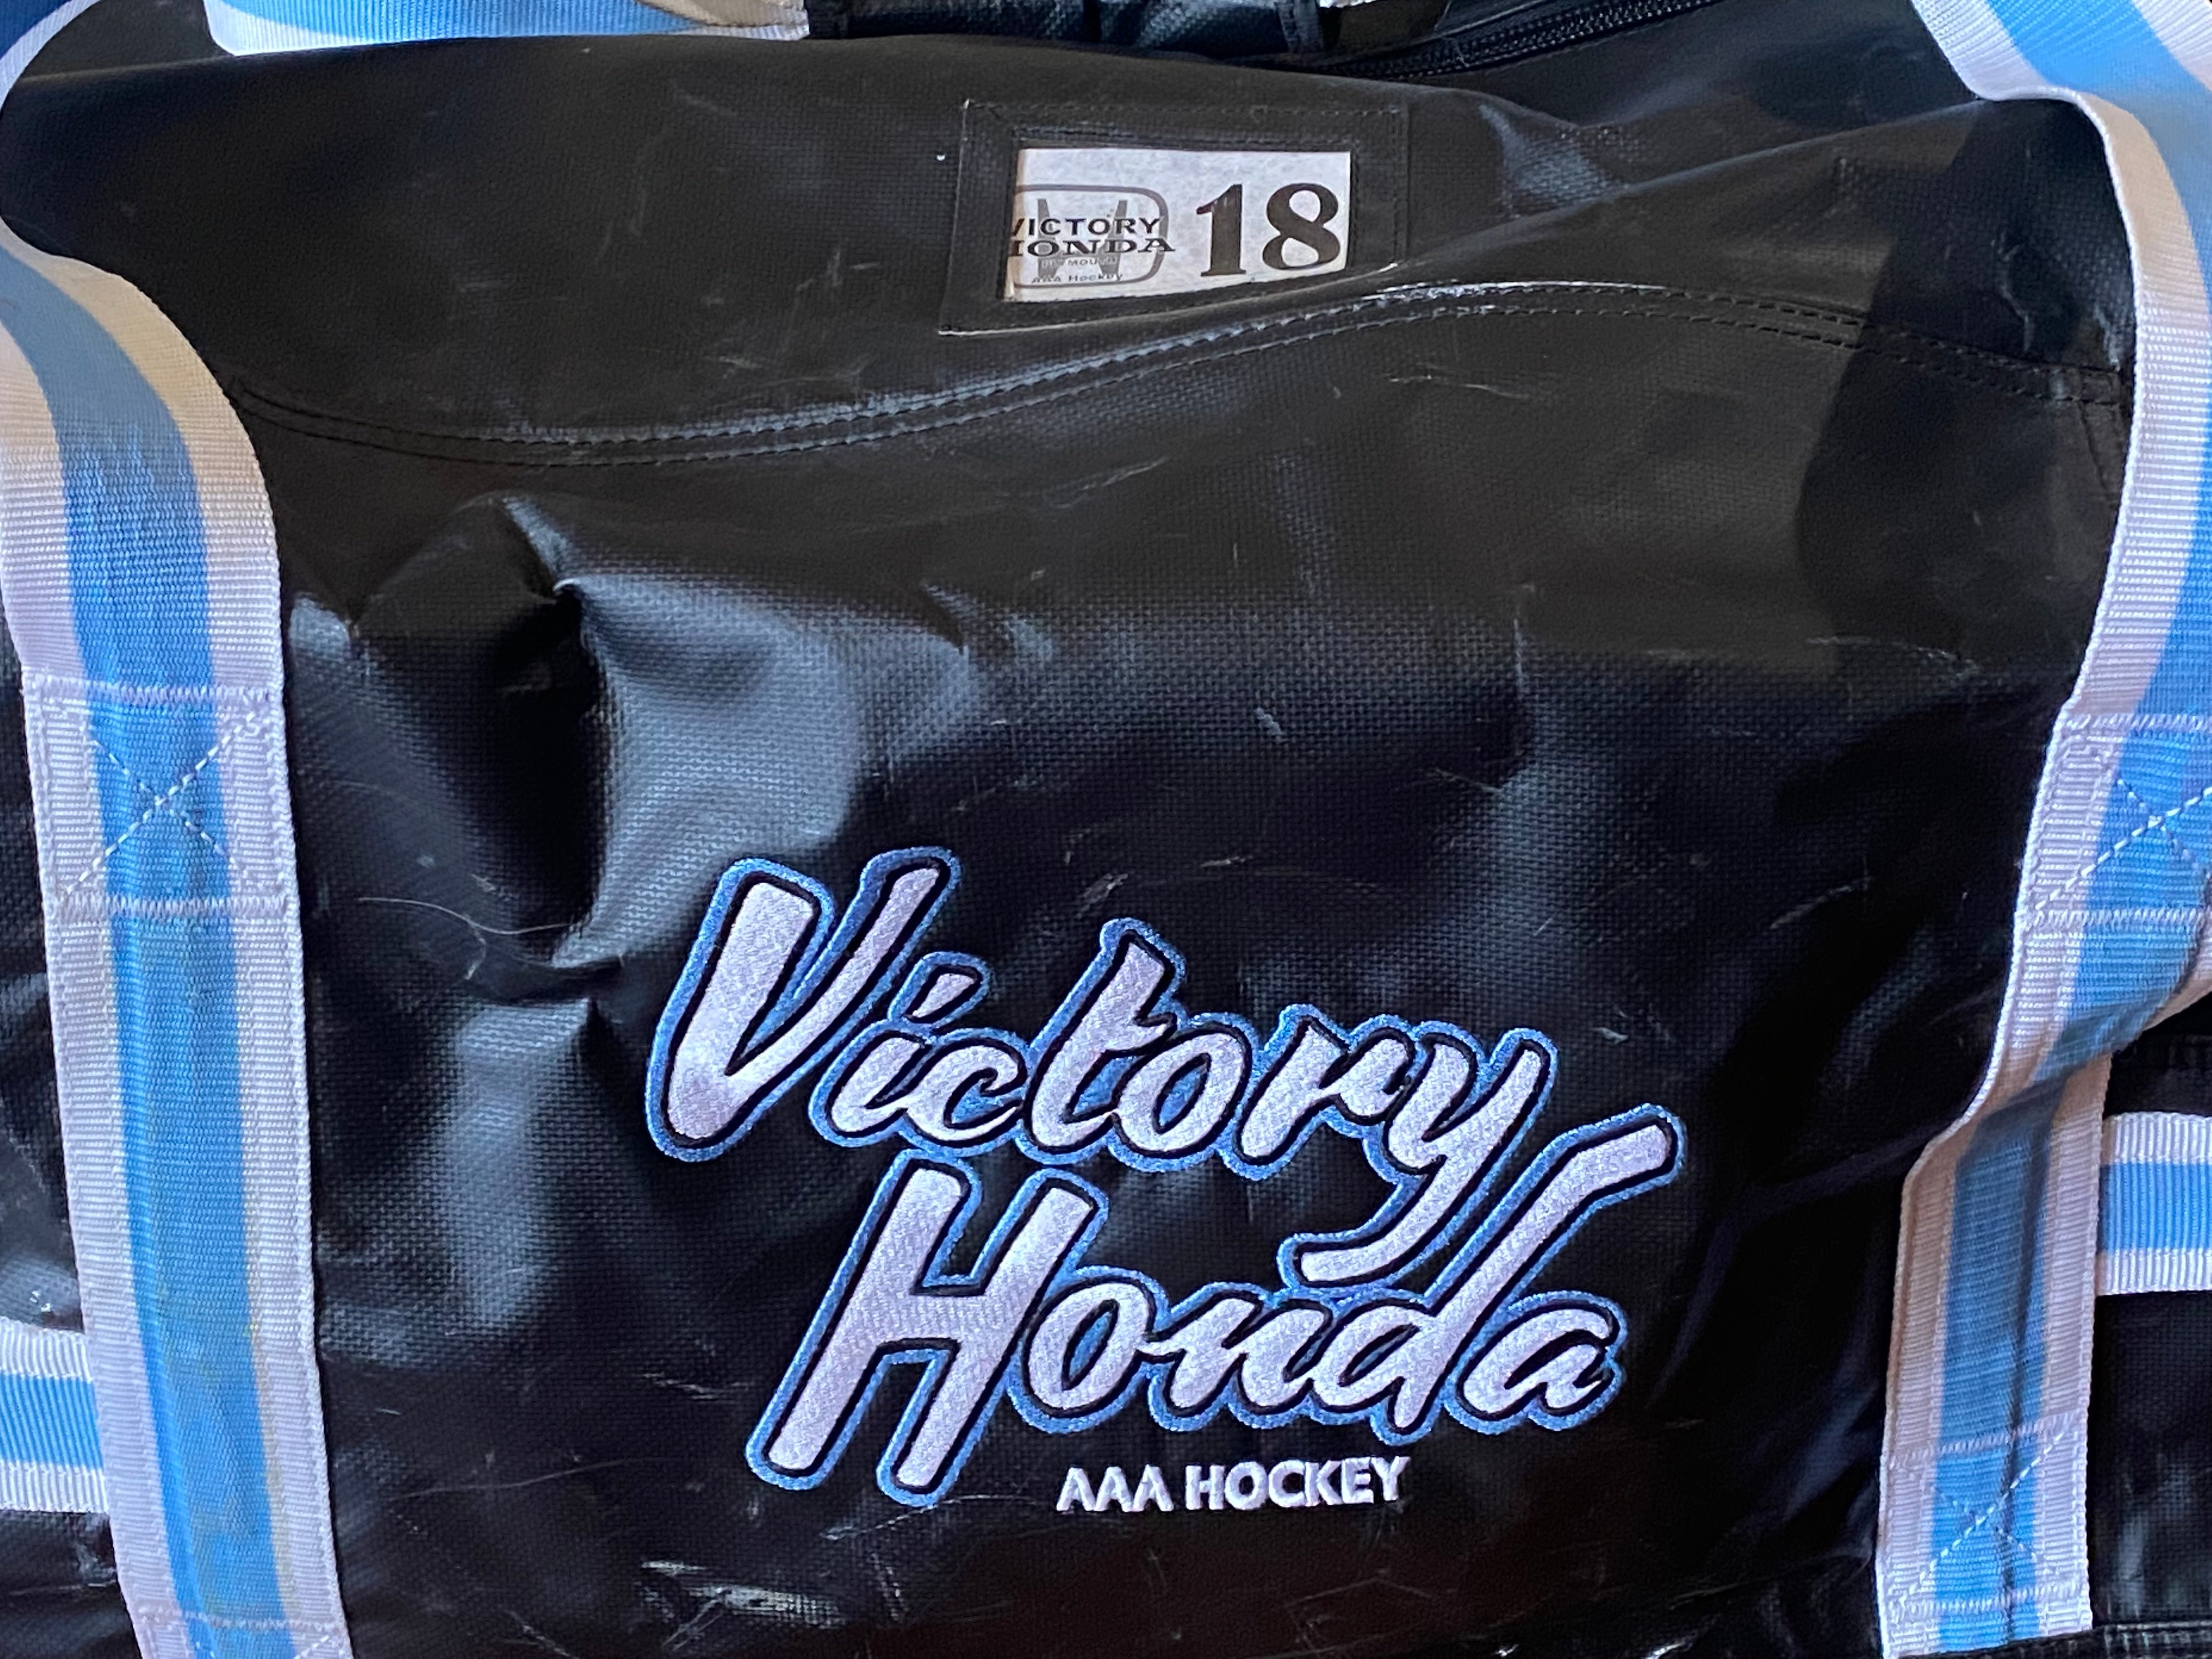 Victory Honda AAA Hockey